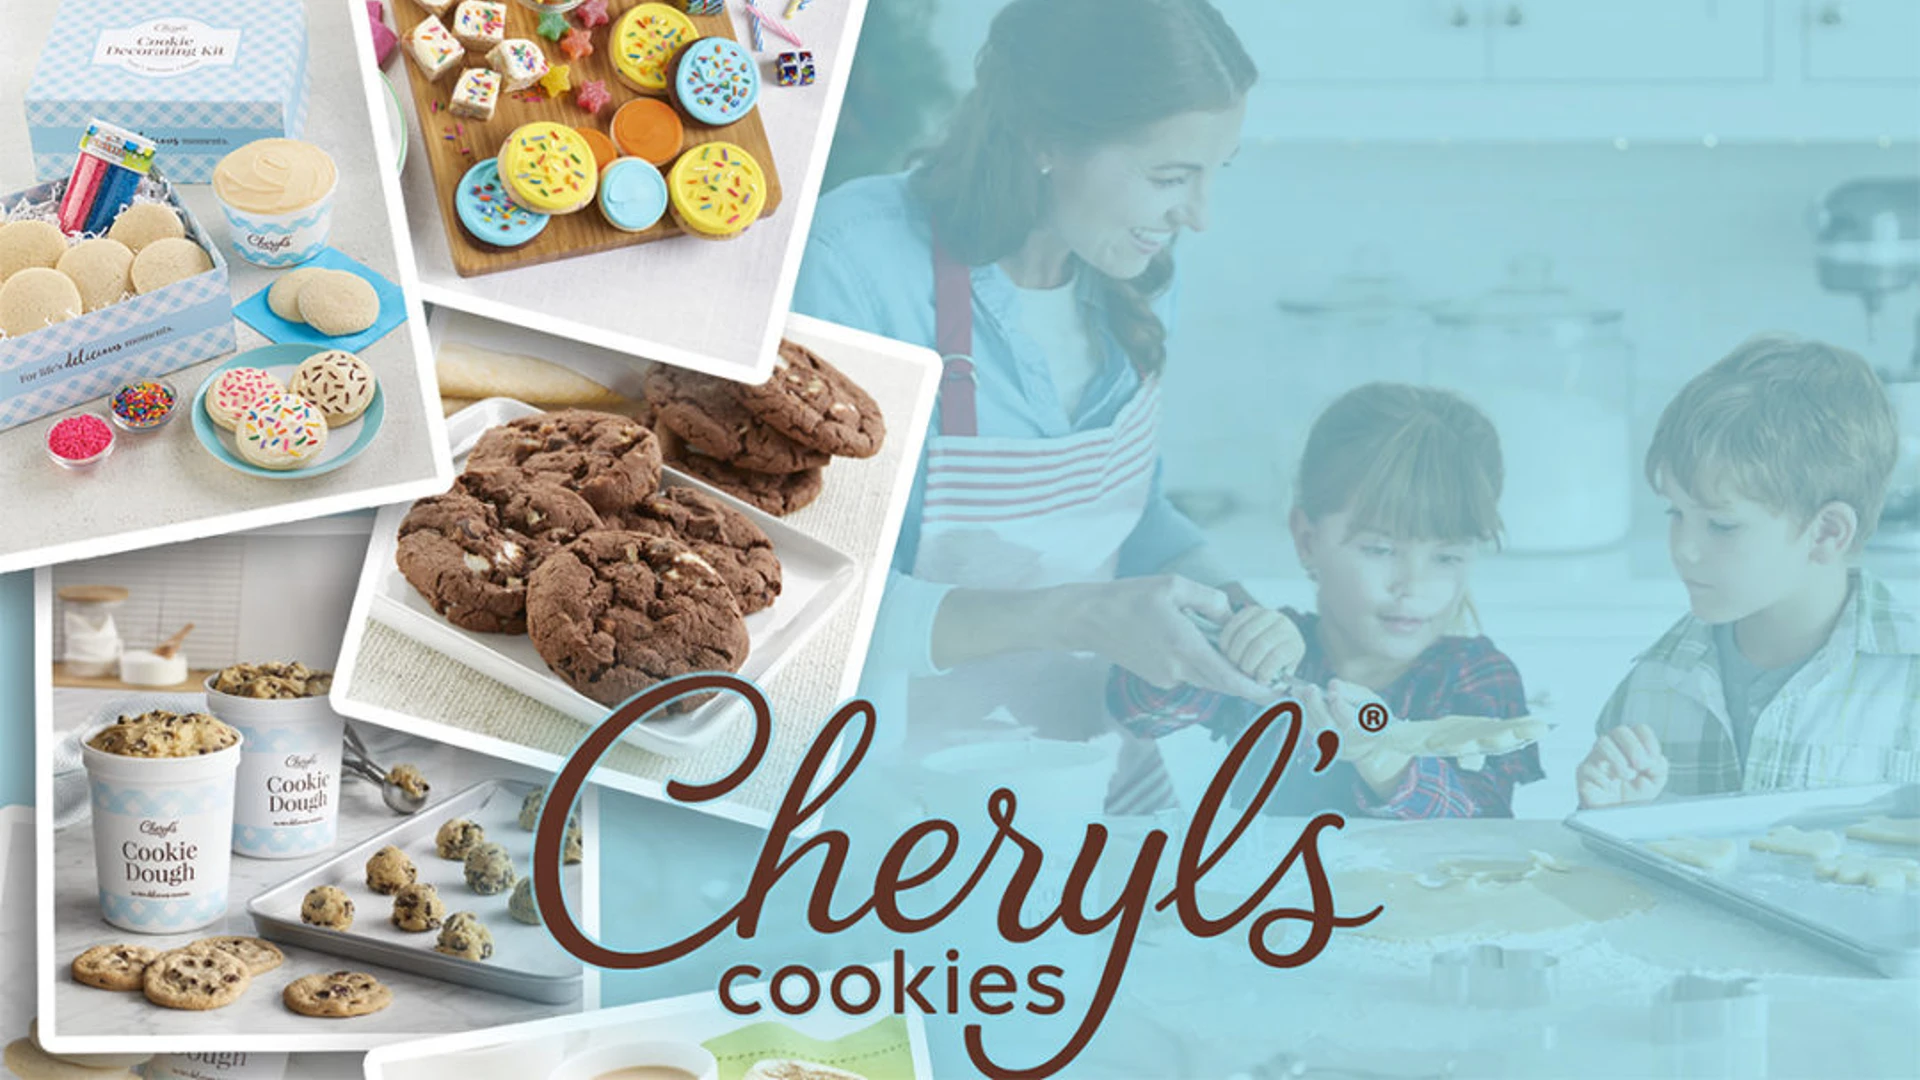 Cheryls Cookies Pormo Codes